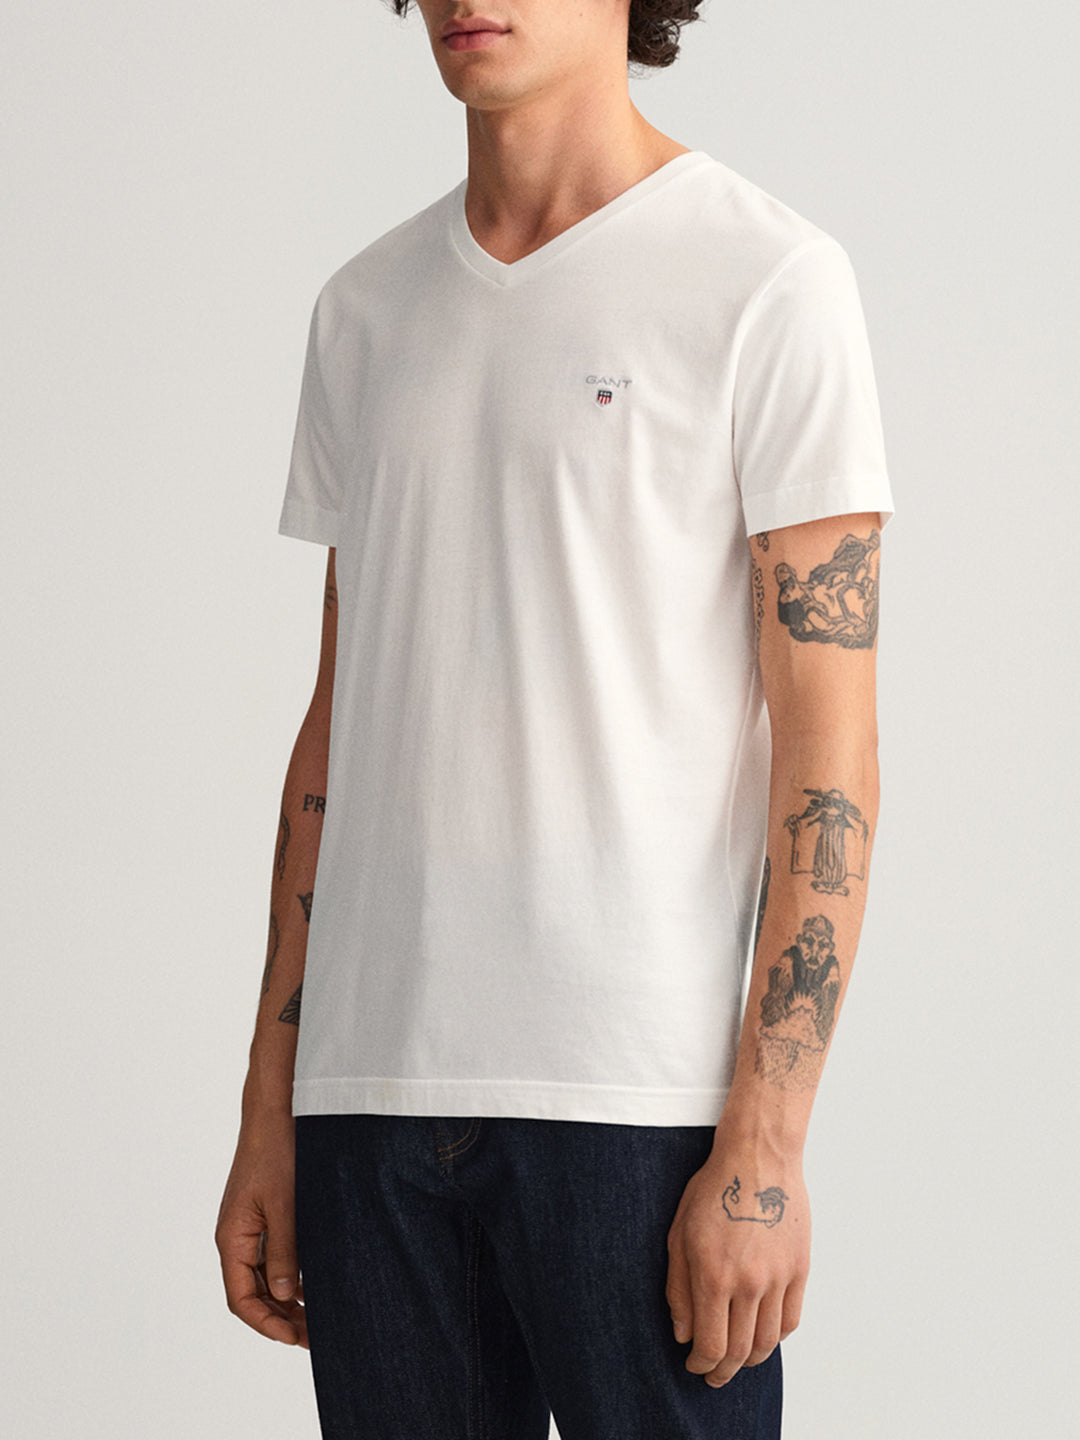 Gant White Original Slim Fit T-Shirt